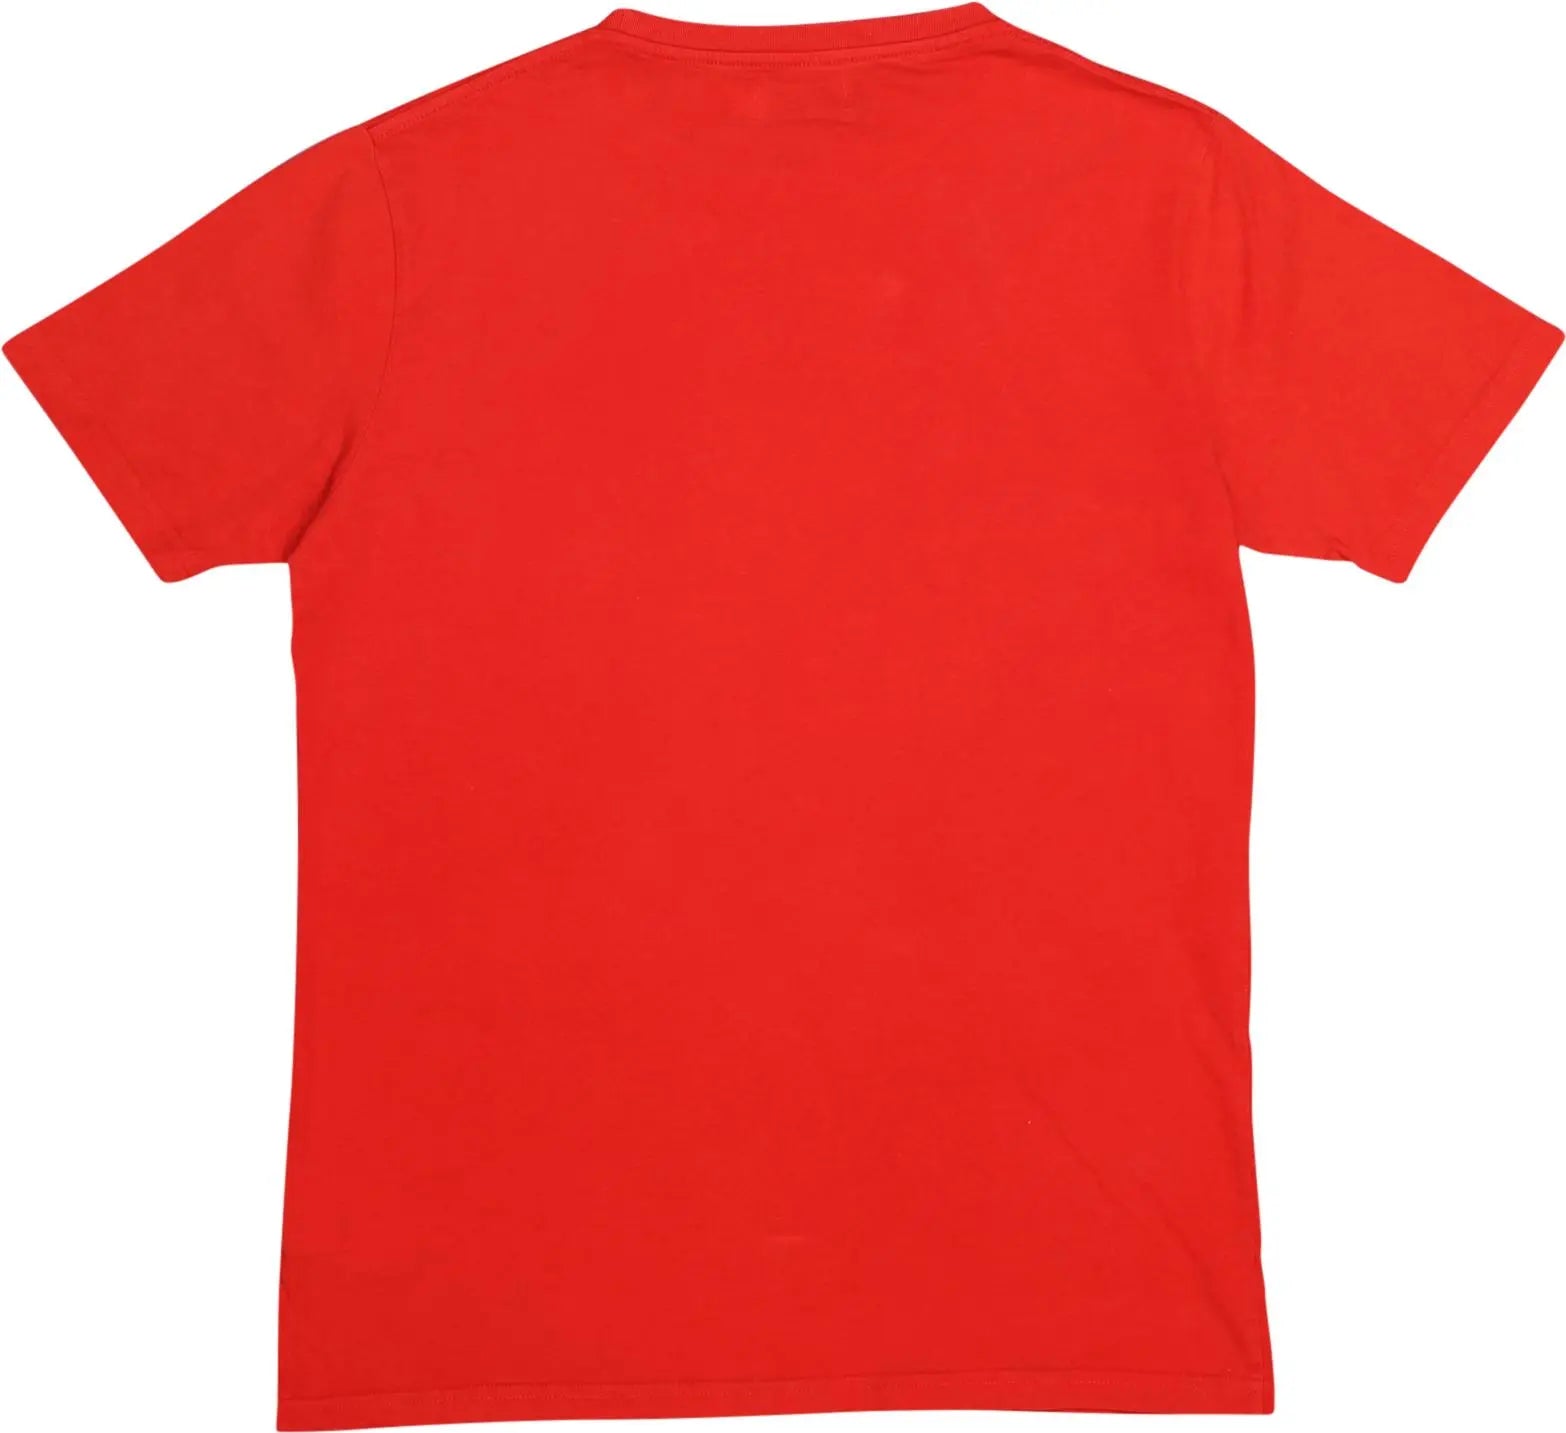 Diadora - Red T-shirt by Diadora- ThriftTale.com - Vintage and second handclothing